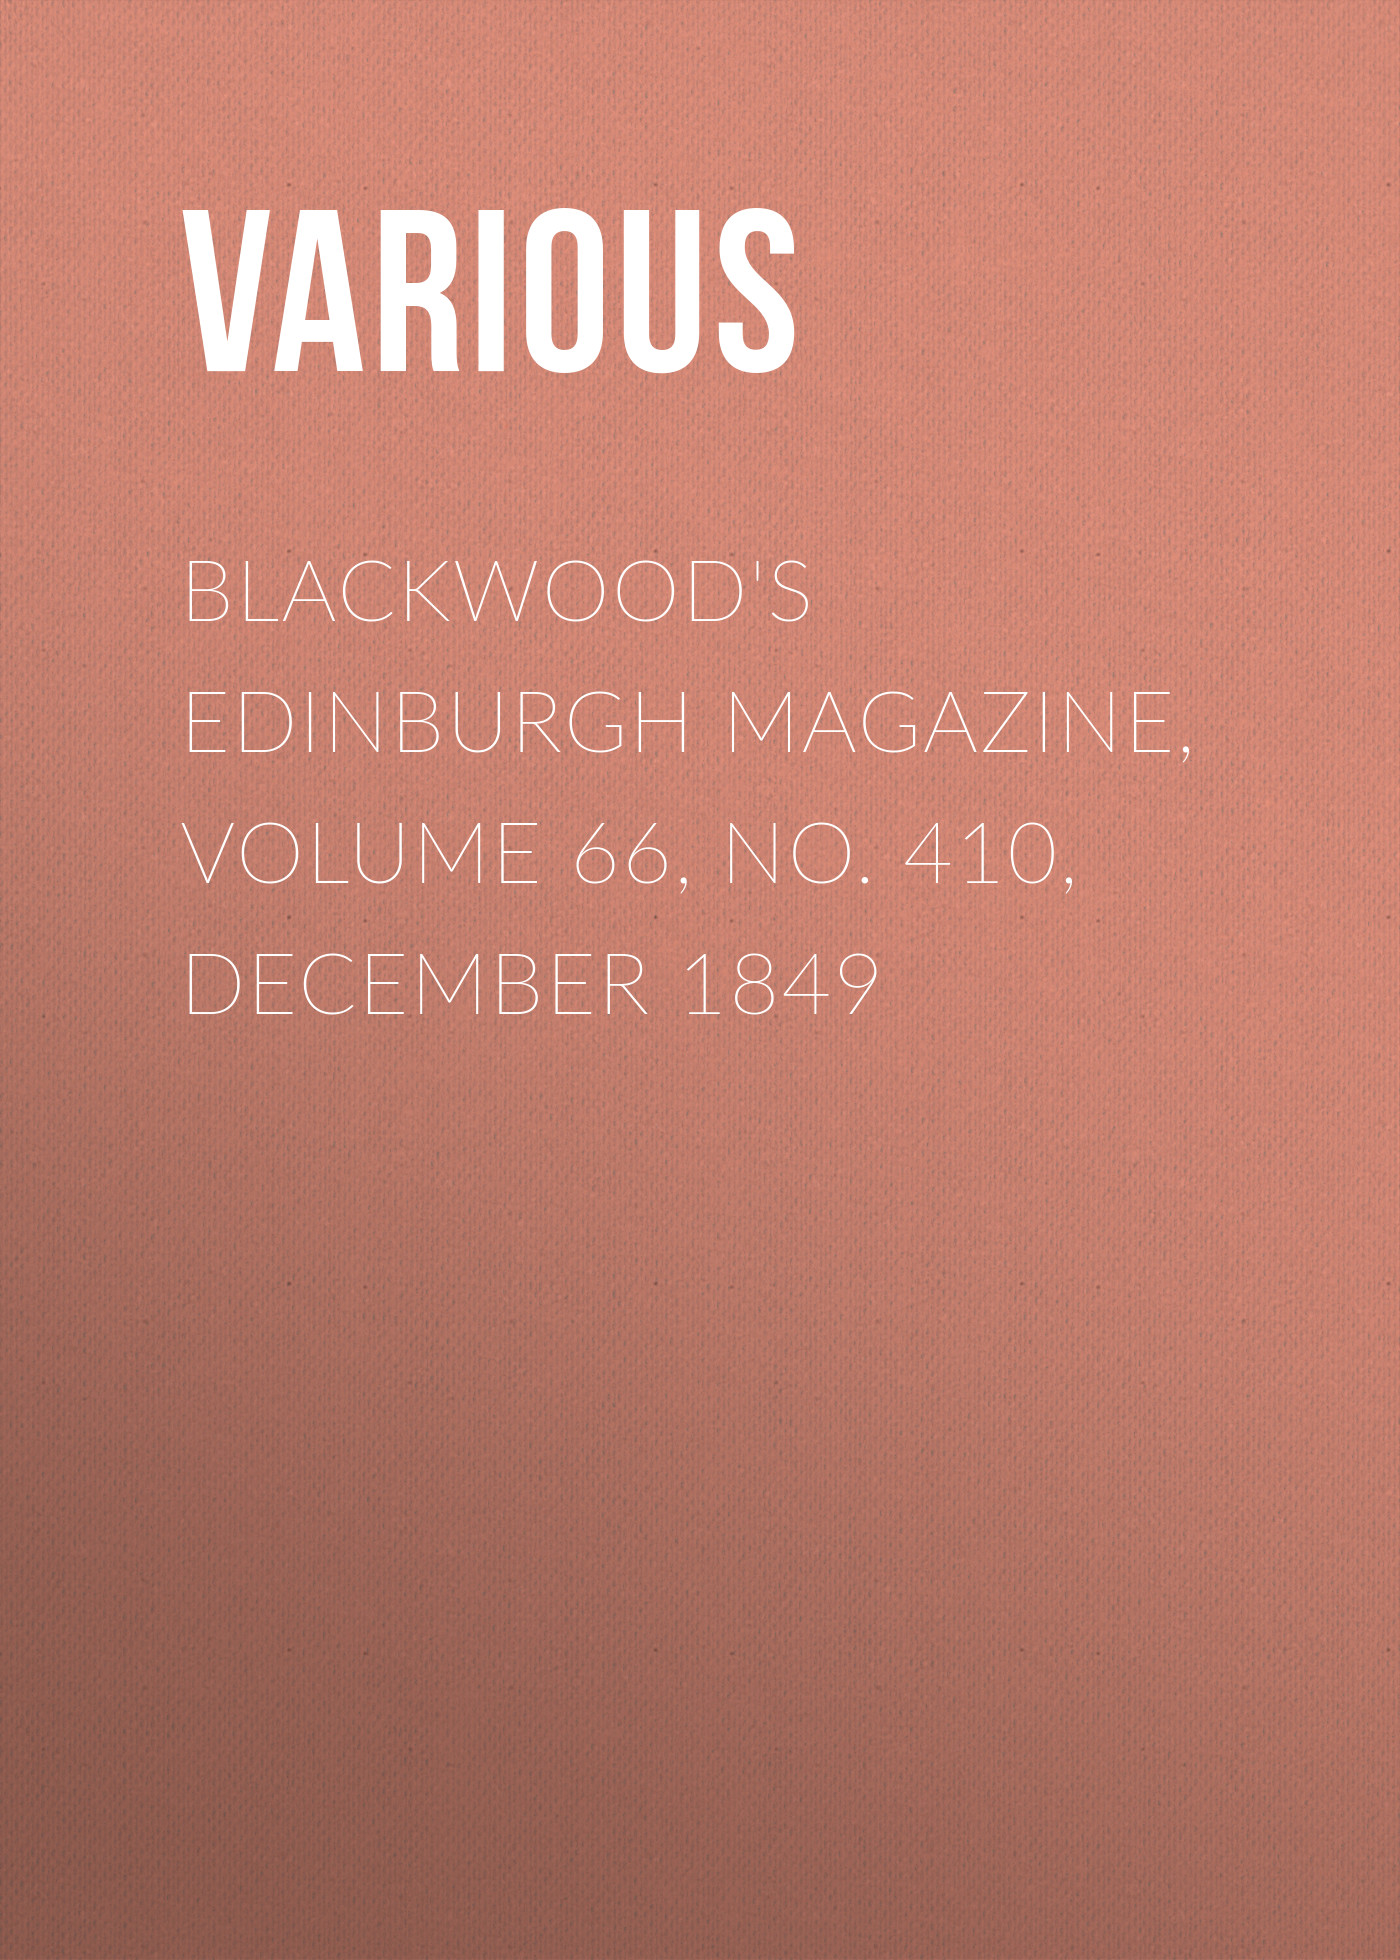 Blackwood's Edinburgh Magazine, Volume 66, No. 410, December 1849